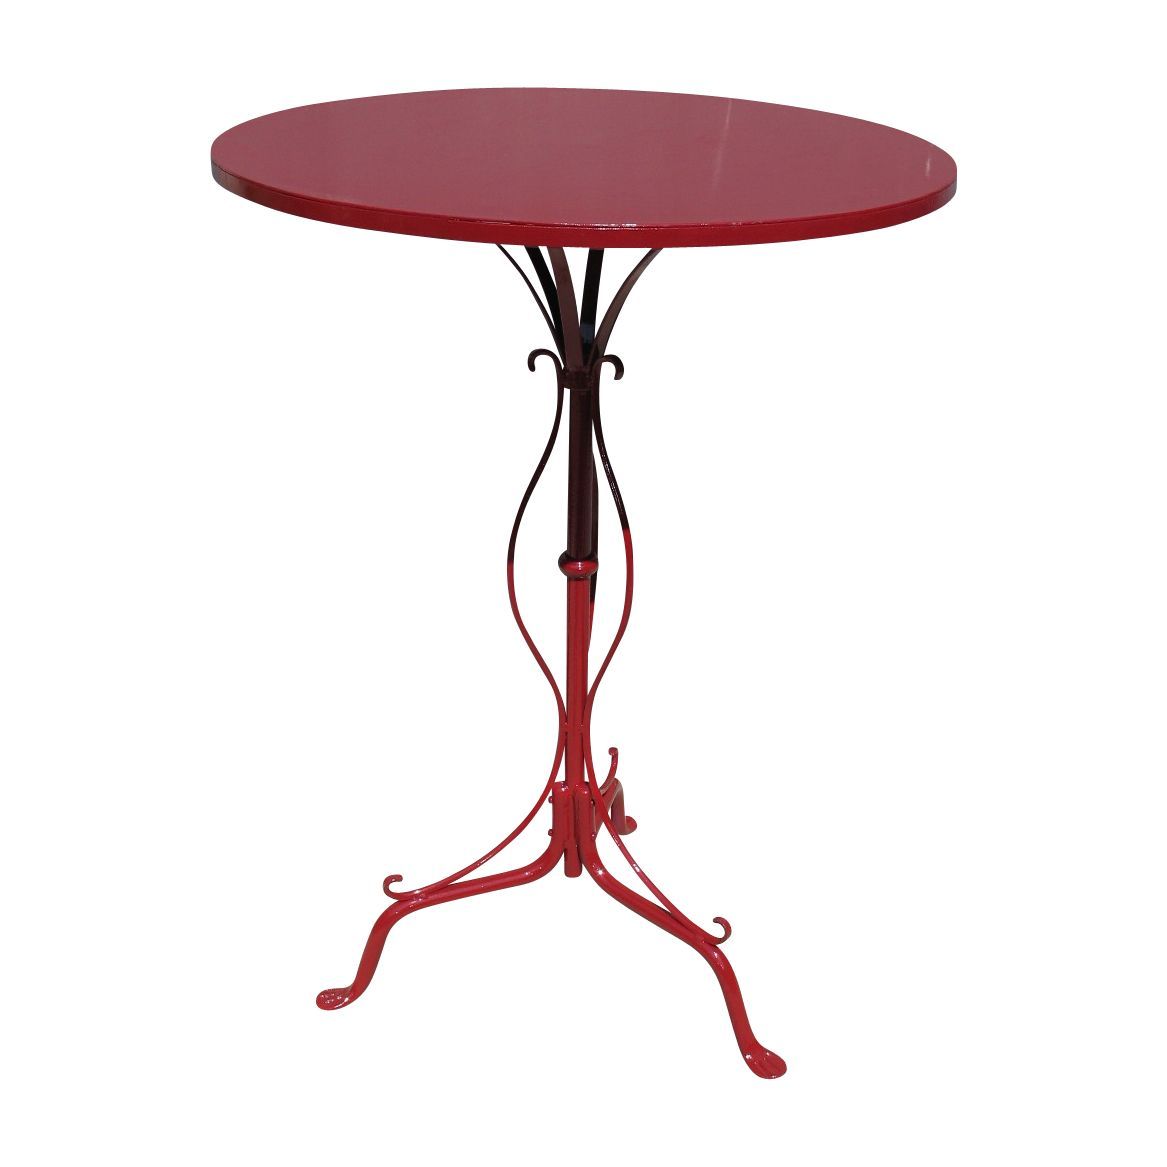 Null 1 有三条腿的高脚桌，也叫Mange-debout，用红色油漆的锻铁制作。

尺寸：D80 H110



重要信息 :



- 除非在描述中说明，&hellip;